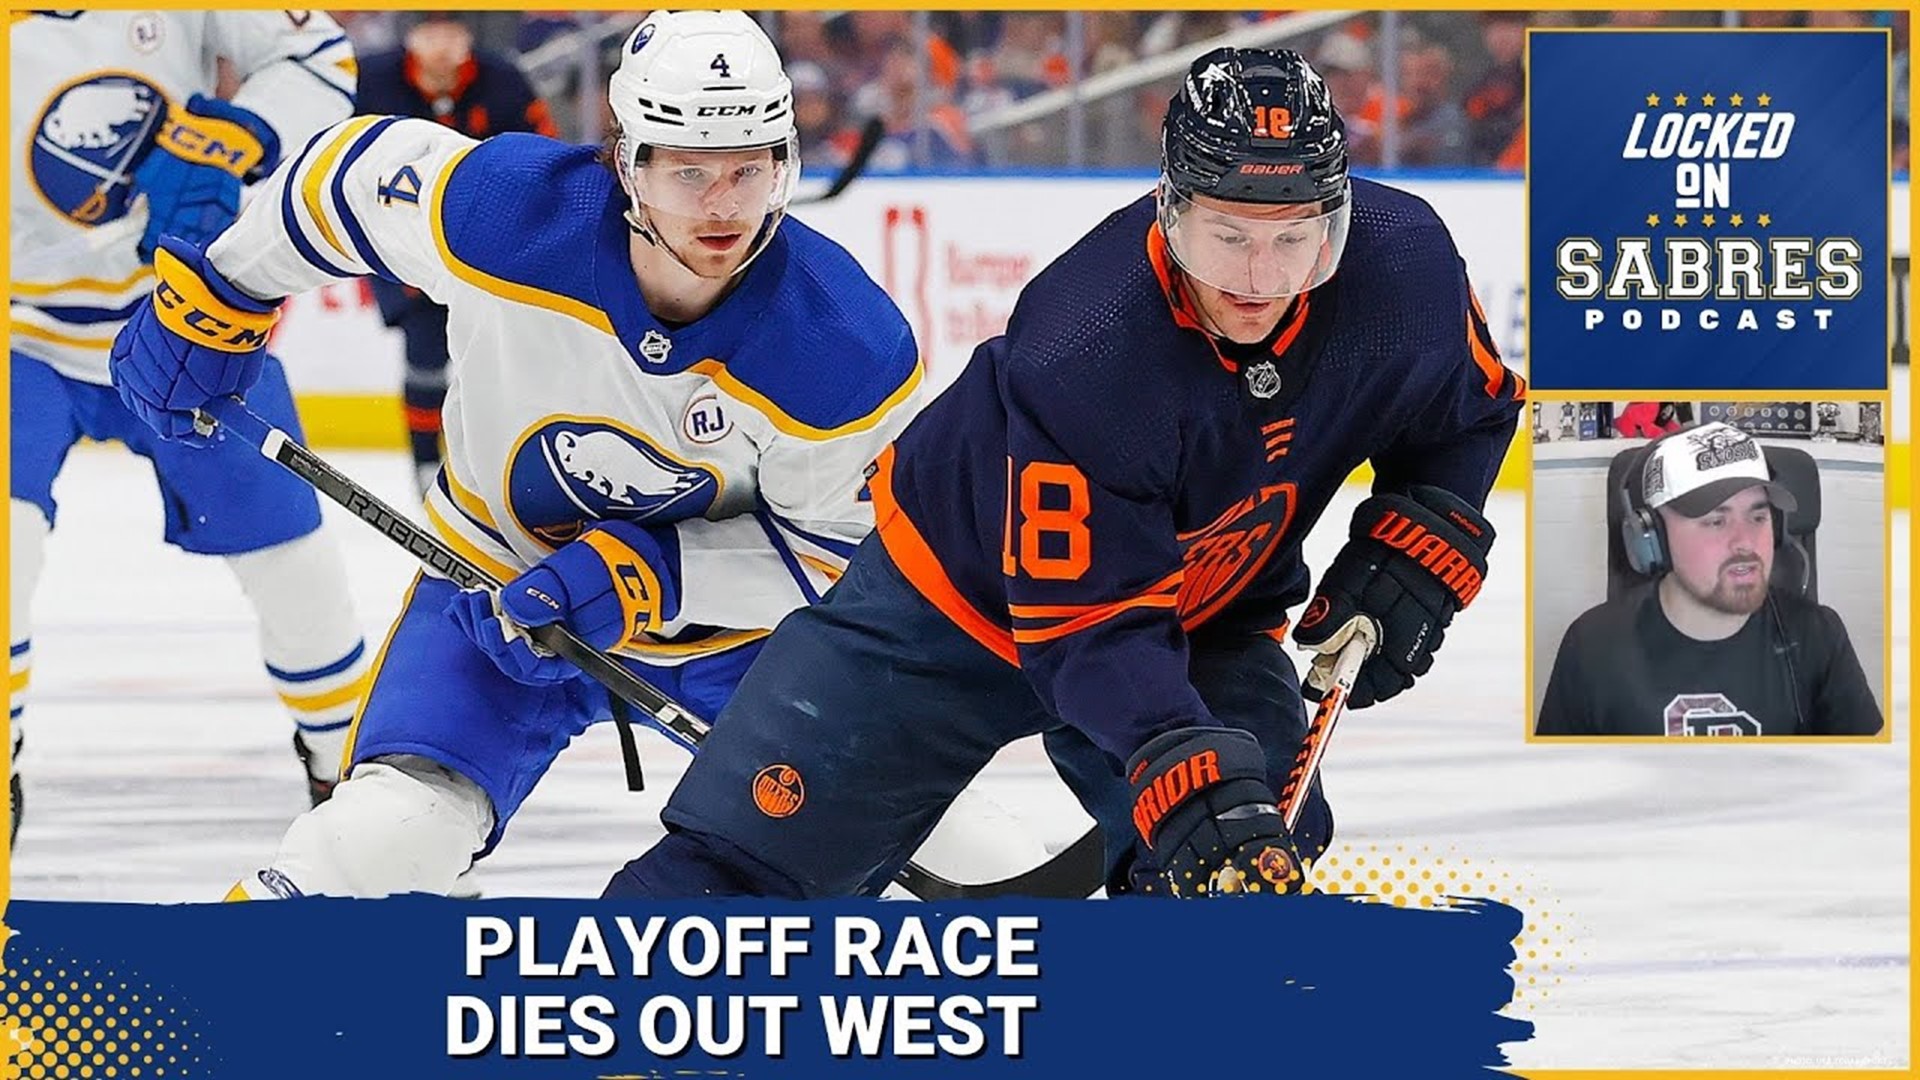 Sabres playoff race dies in Edmonton